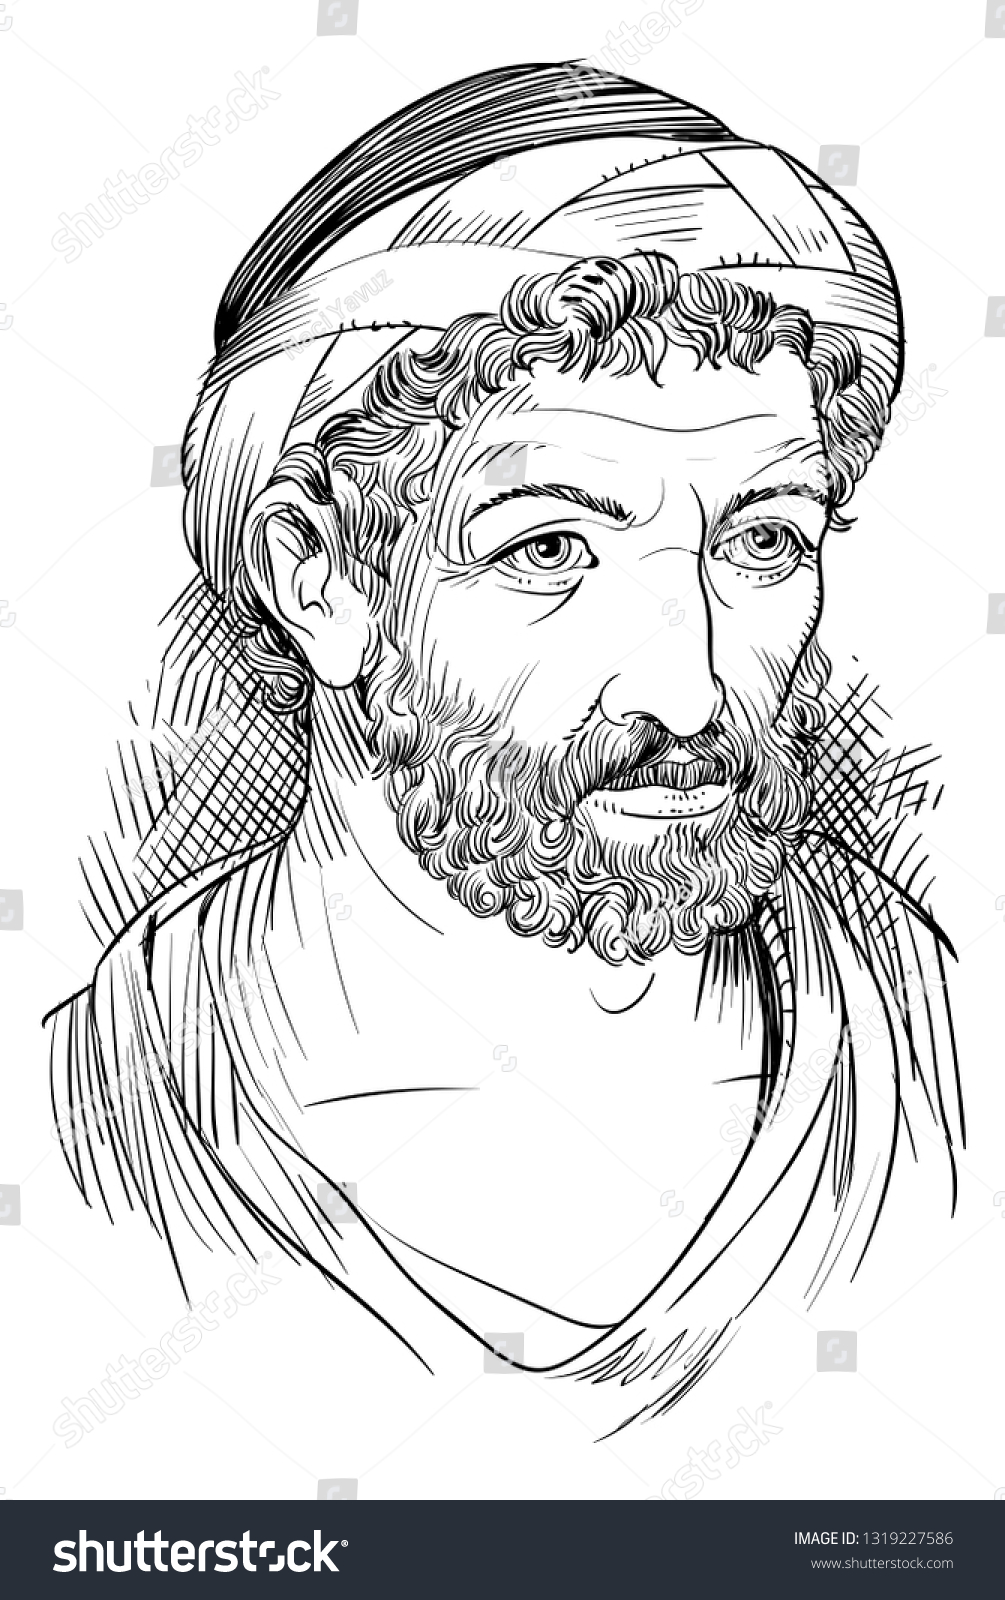 Archytas Portrait Line Art Illustration He Stock Vector (Royalty Free ...